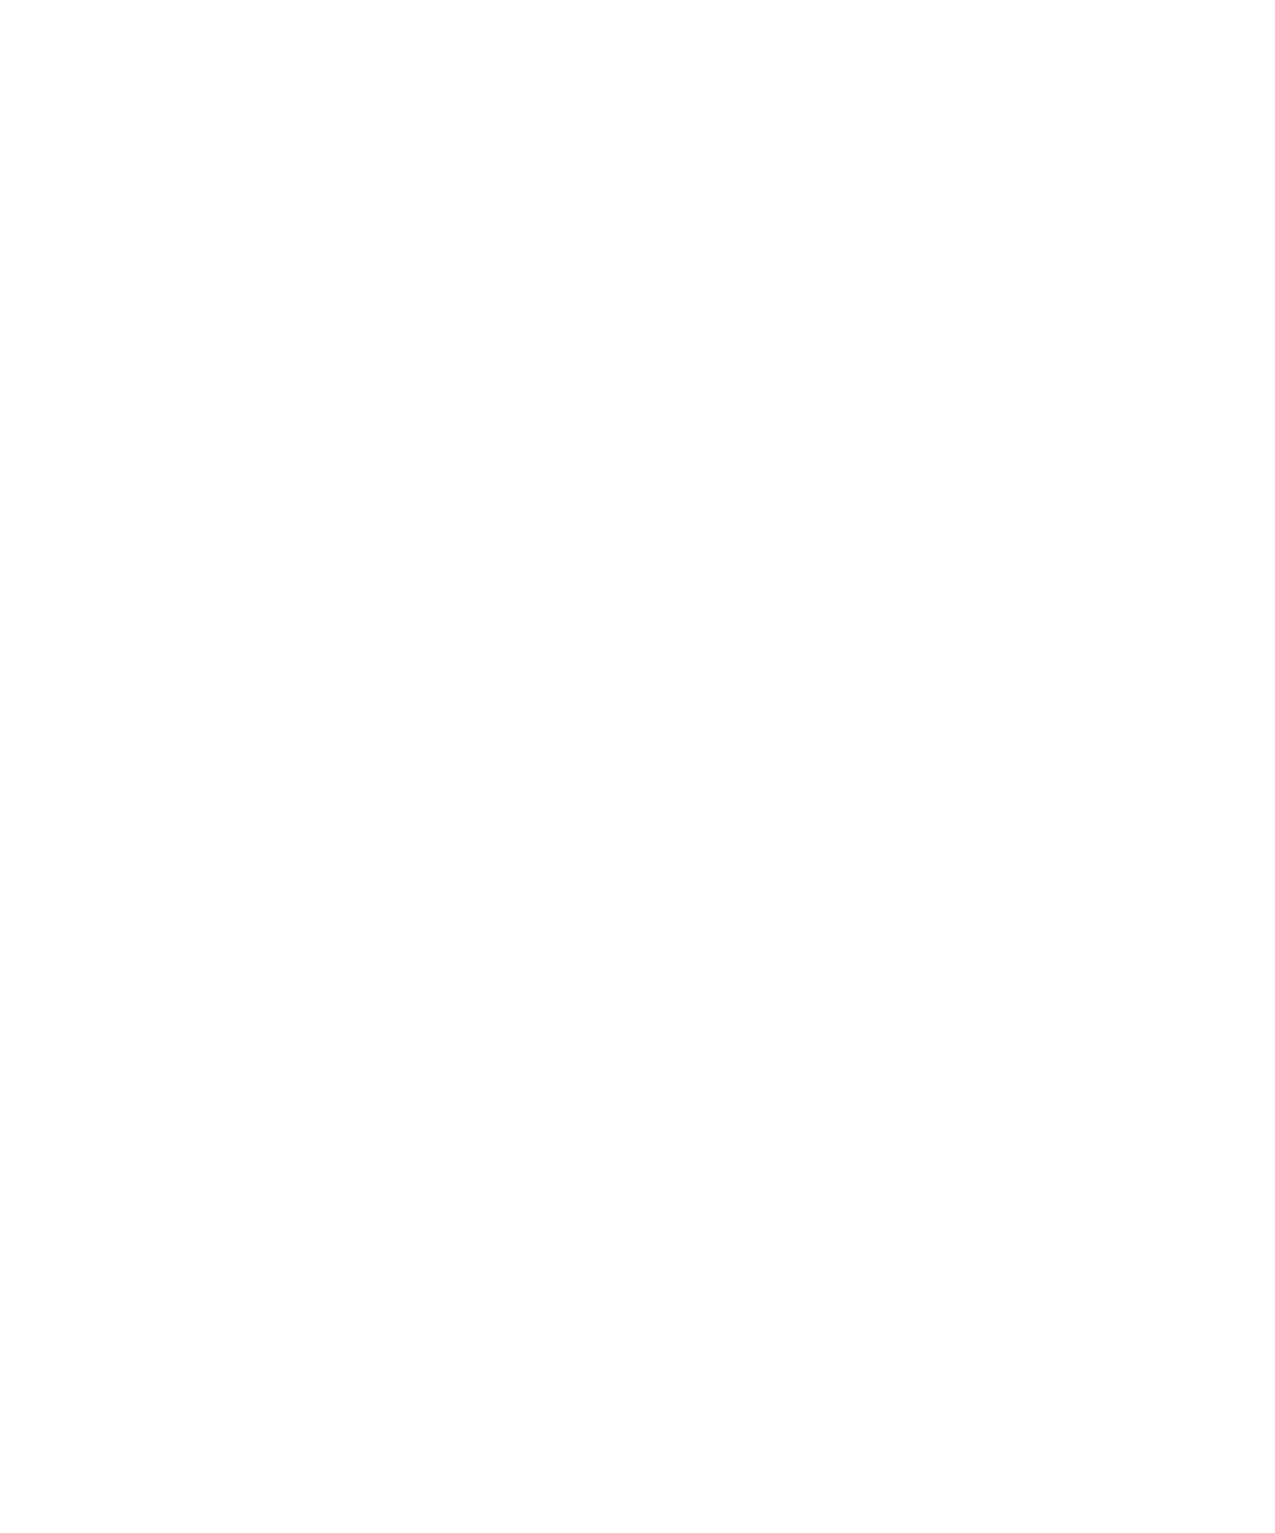 Europris logo for dark backgrounds (transparent PNG)